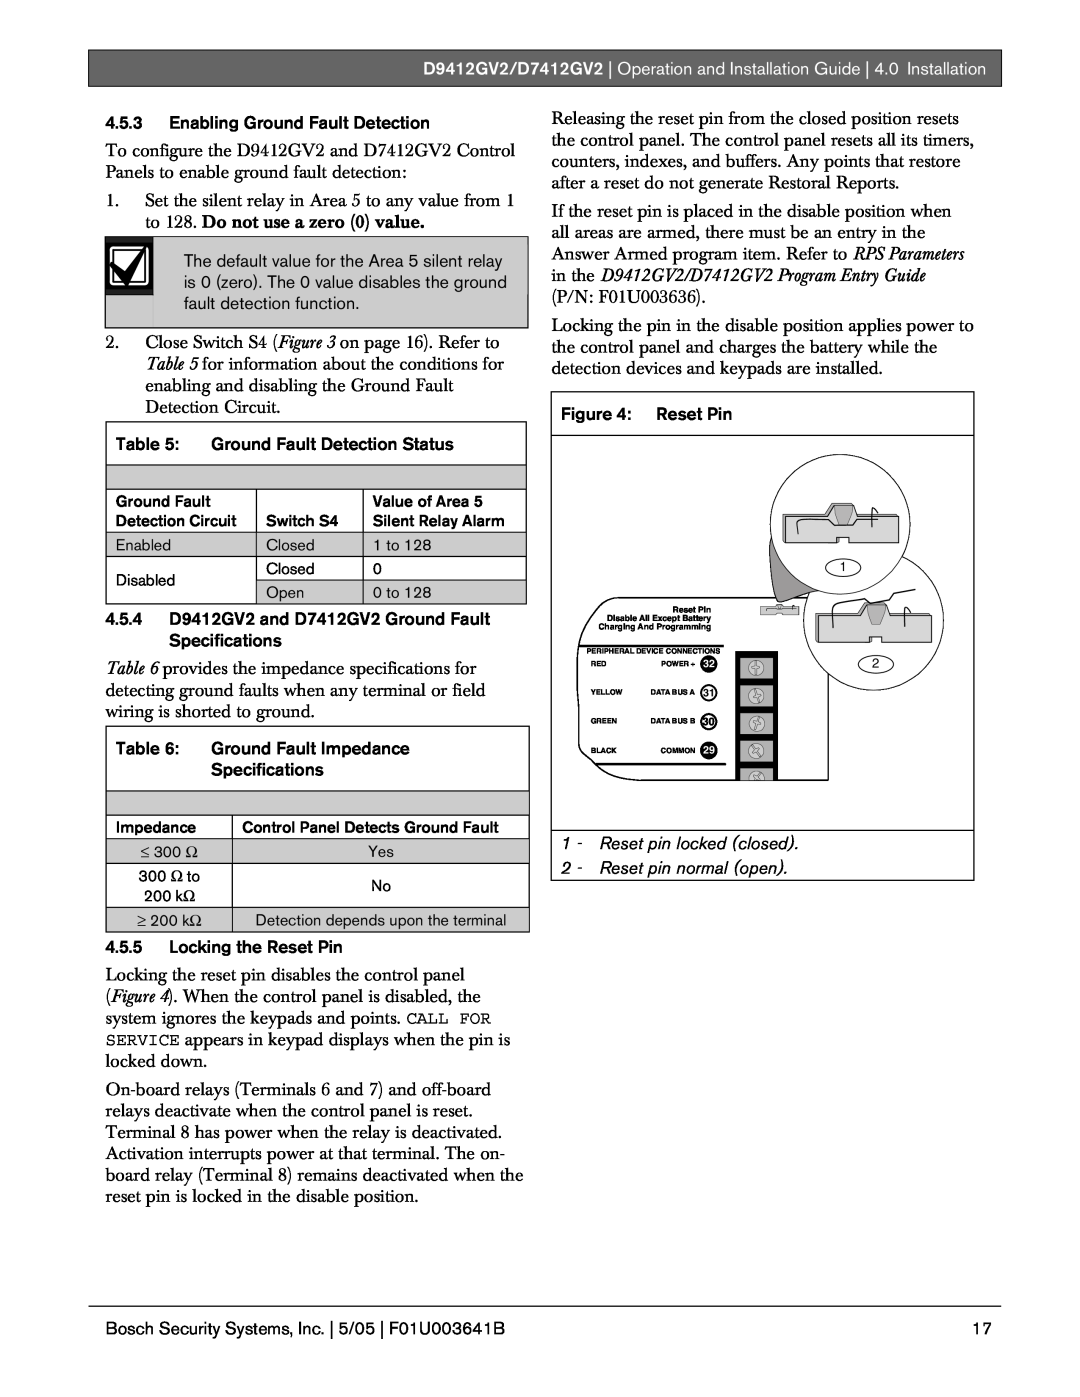 Bosch Appliances D9412GV2 manual 4.5.3Enabling Ground Fault Detection 